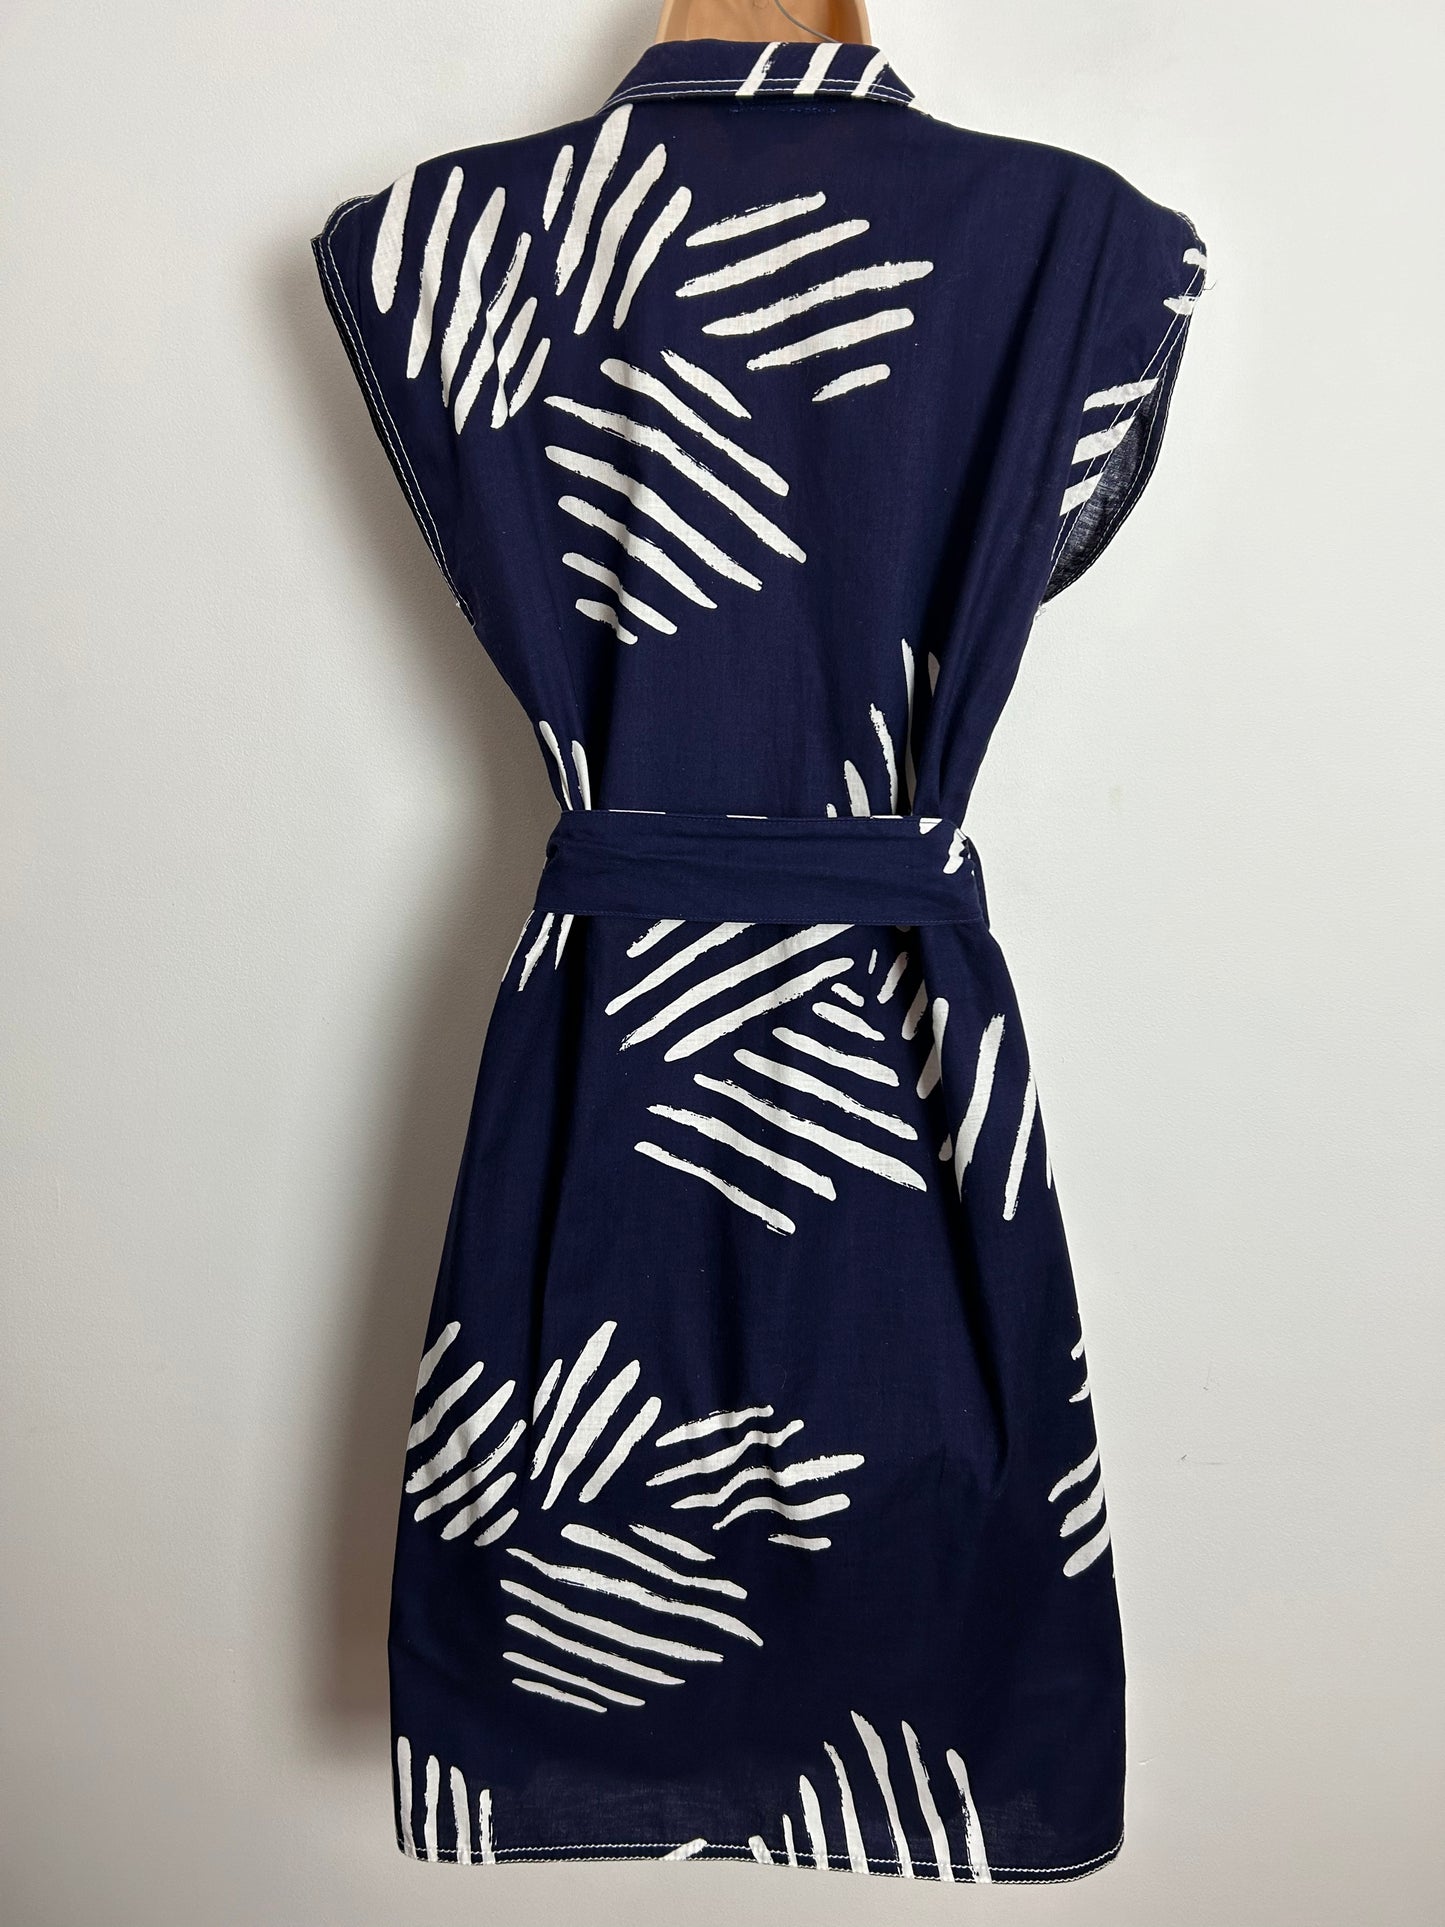 Vintage Late 1970s RARE UK Size 12 FENNO-SPORT Finnish Design Navy Blue & White Stipe Pattern Belted Cotton Day Dress